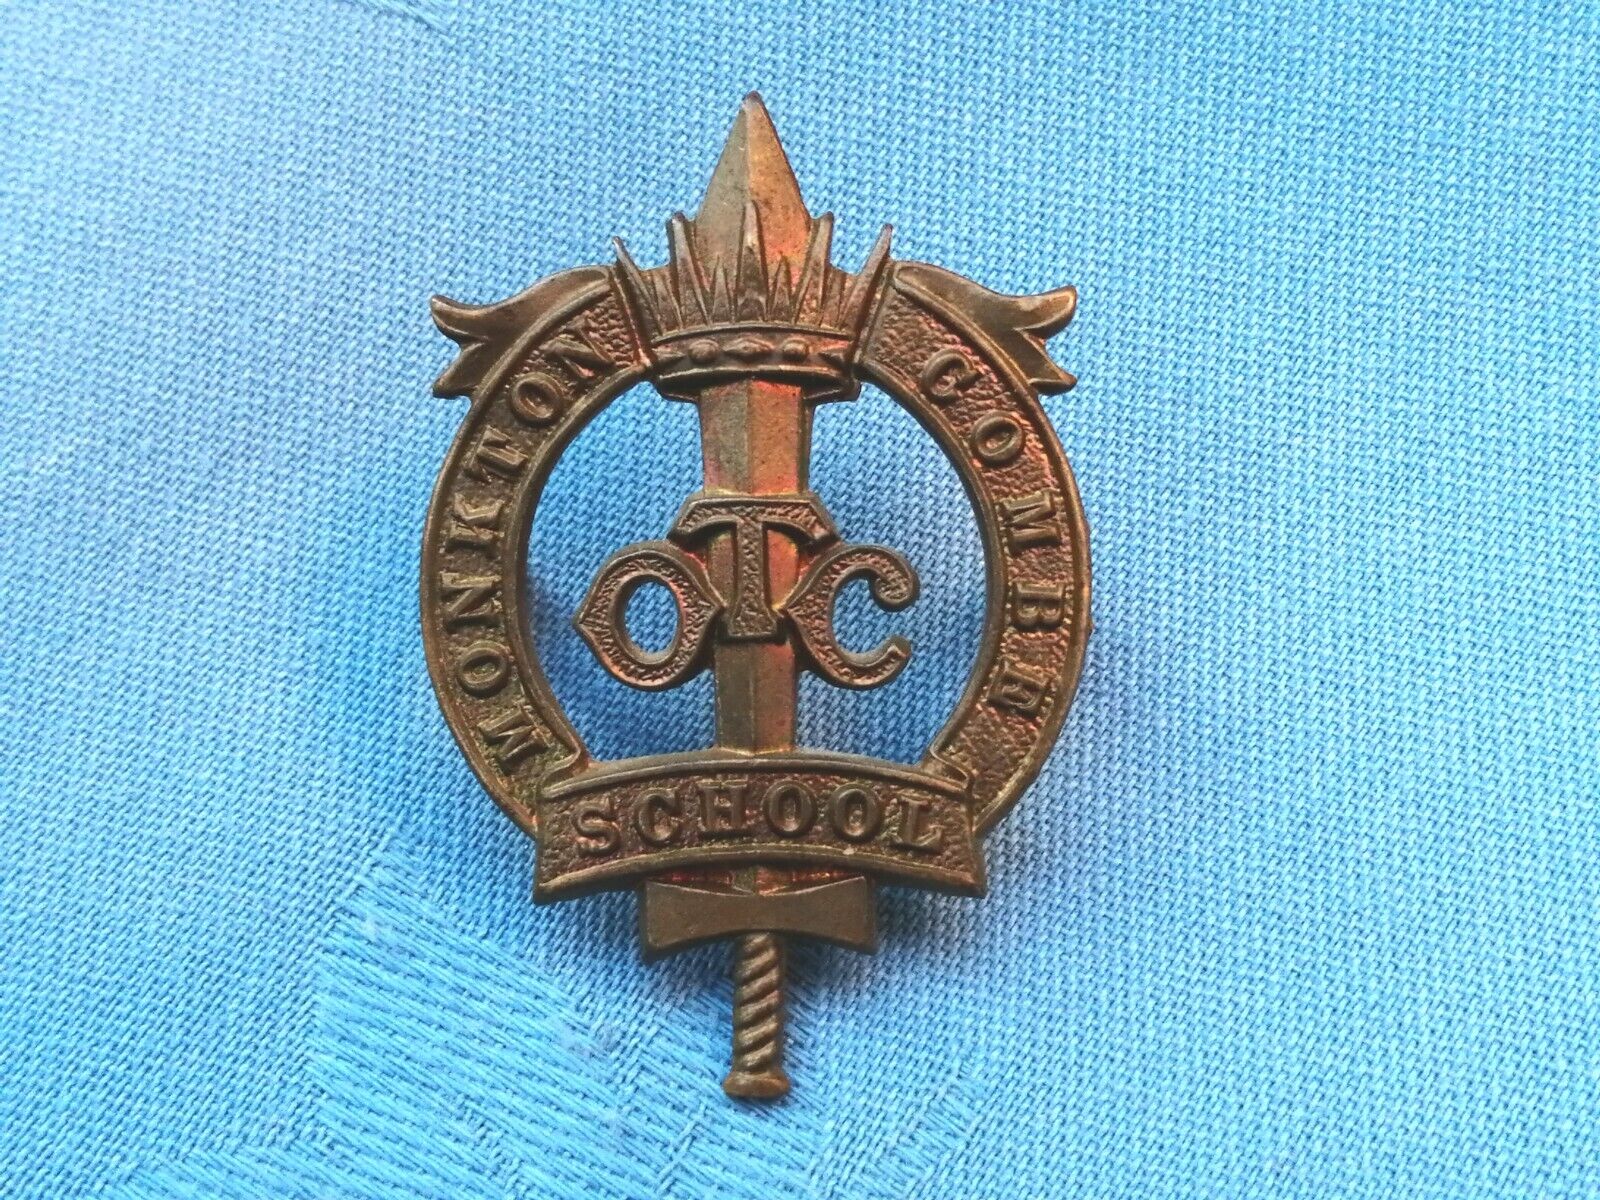 The Monkton School ( Bath ) Officer Training Corp cap badge.